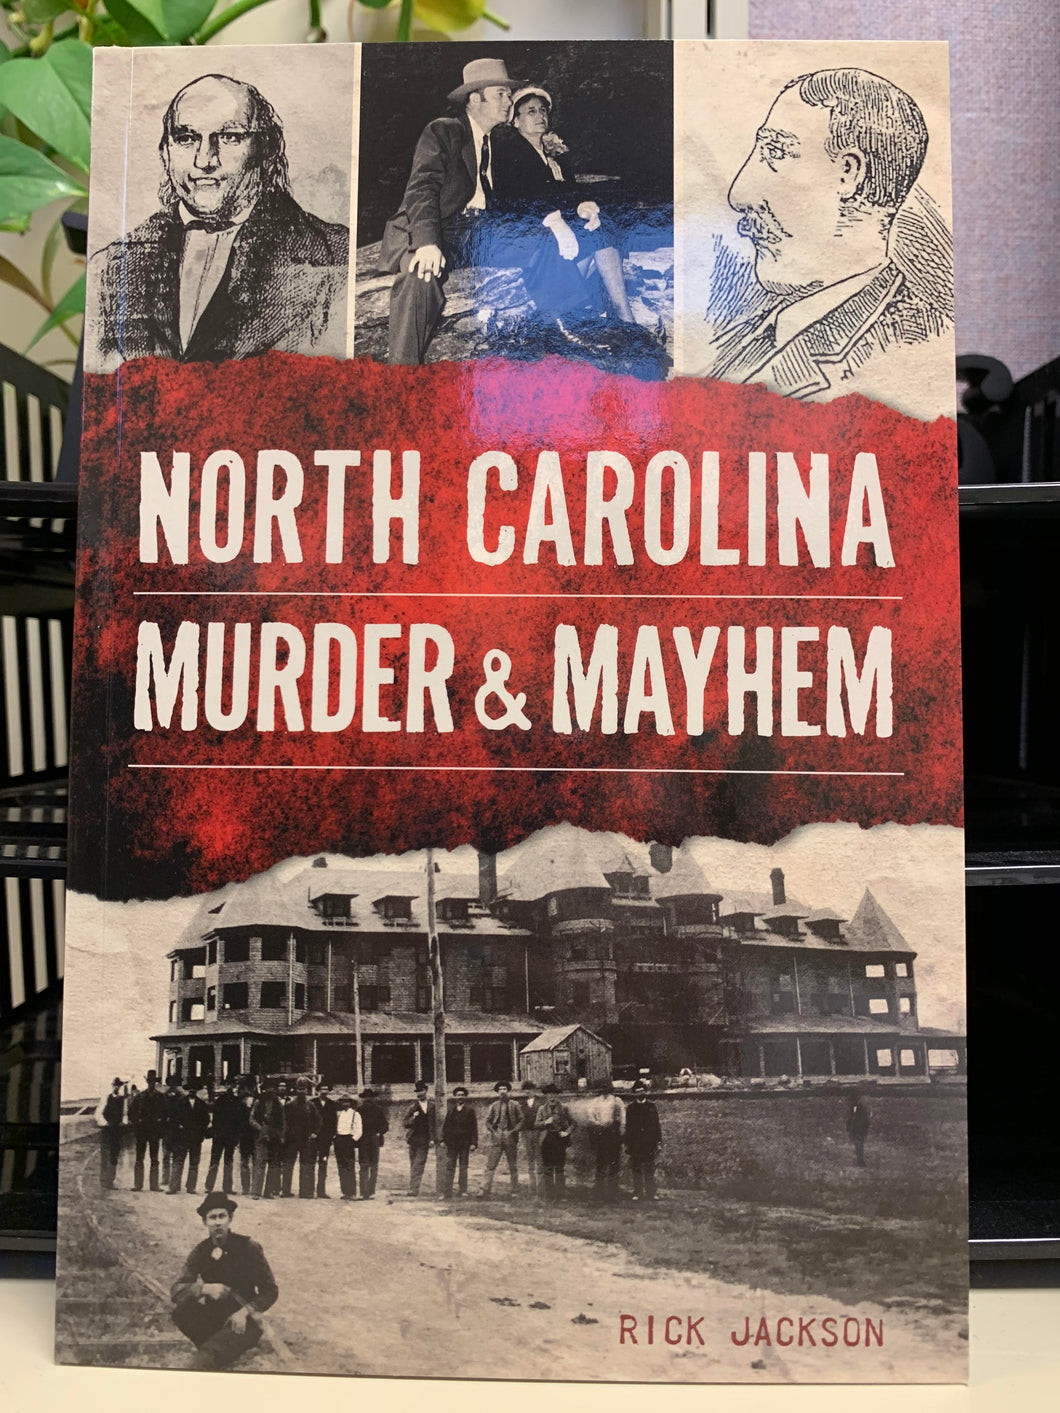 North Carolina Murder and Mayhem by Rick Jackson